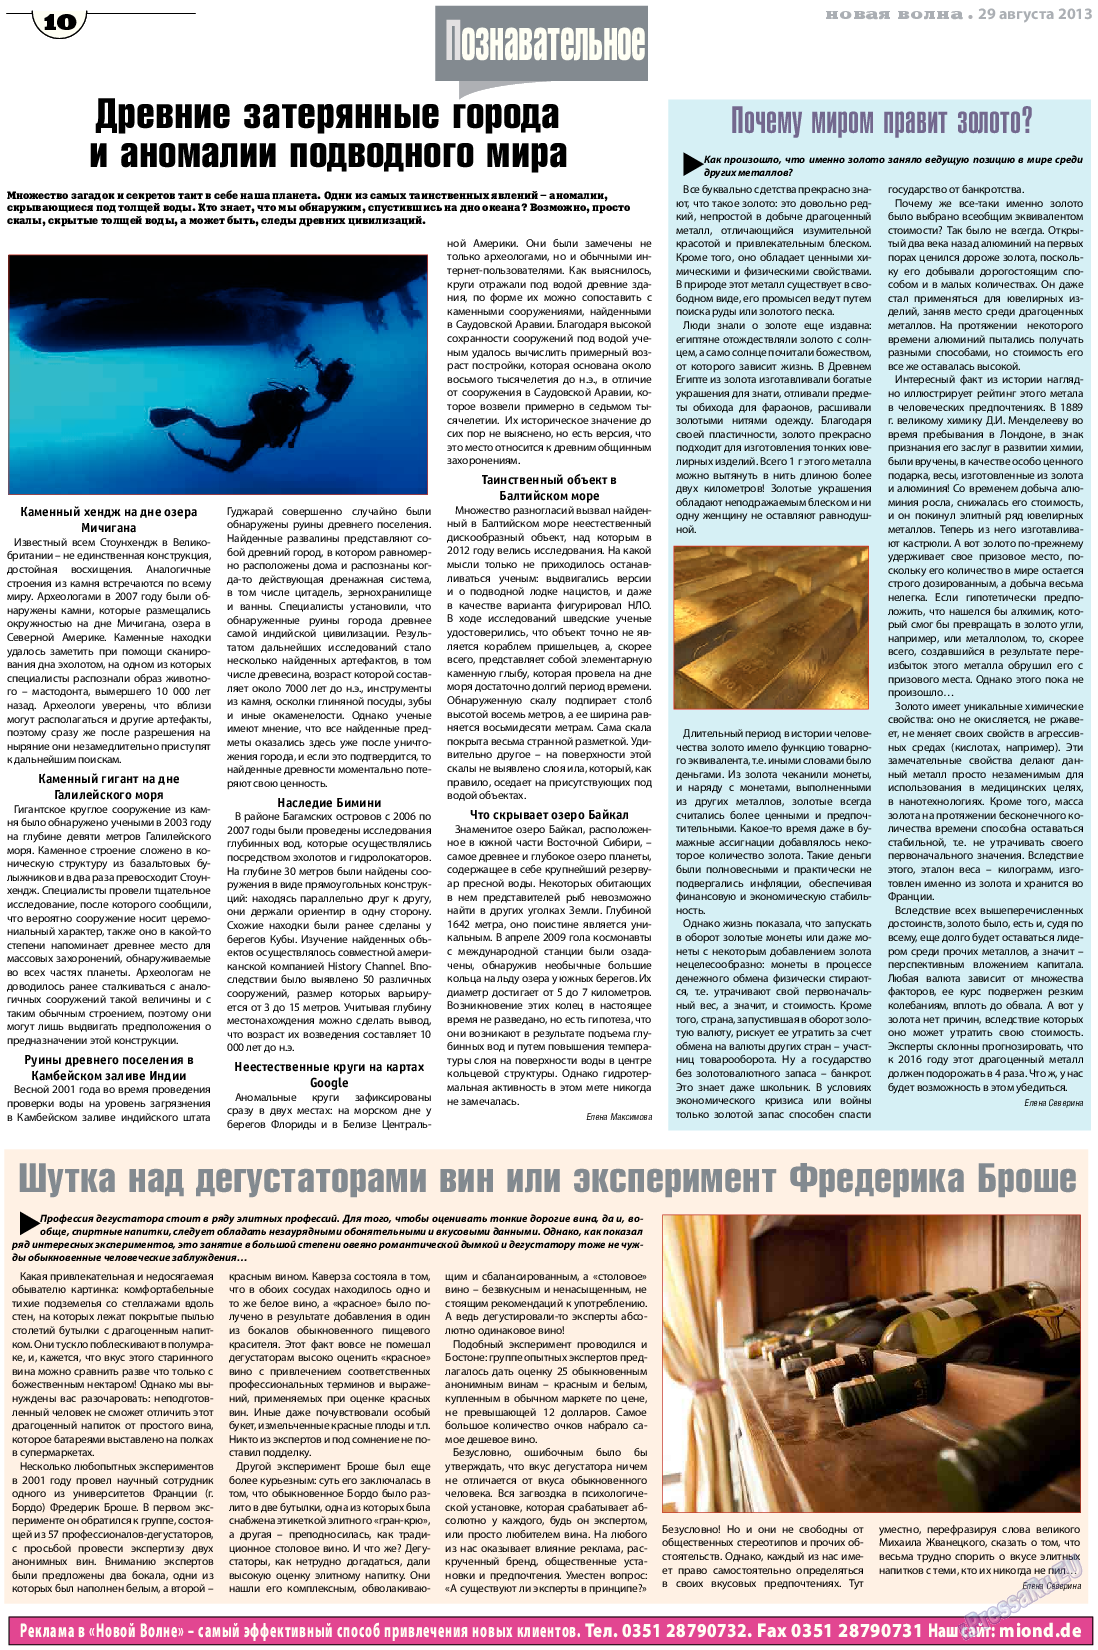 Новая Wолна, газета. 2013 №35 стр.10